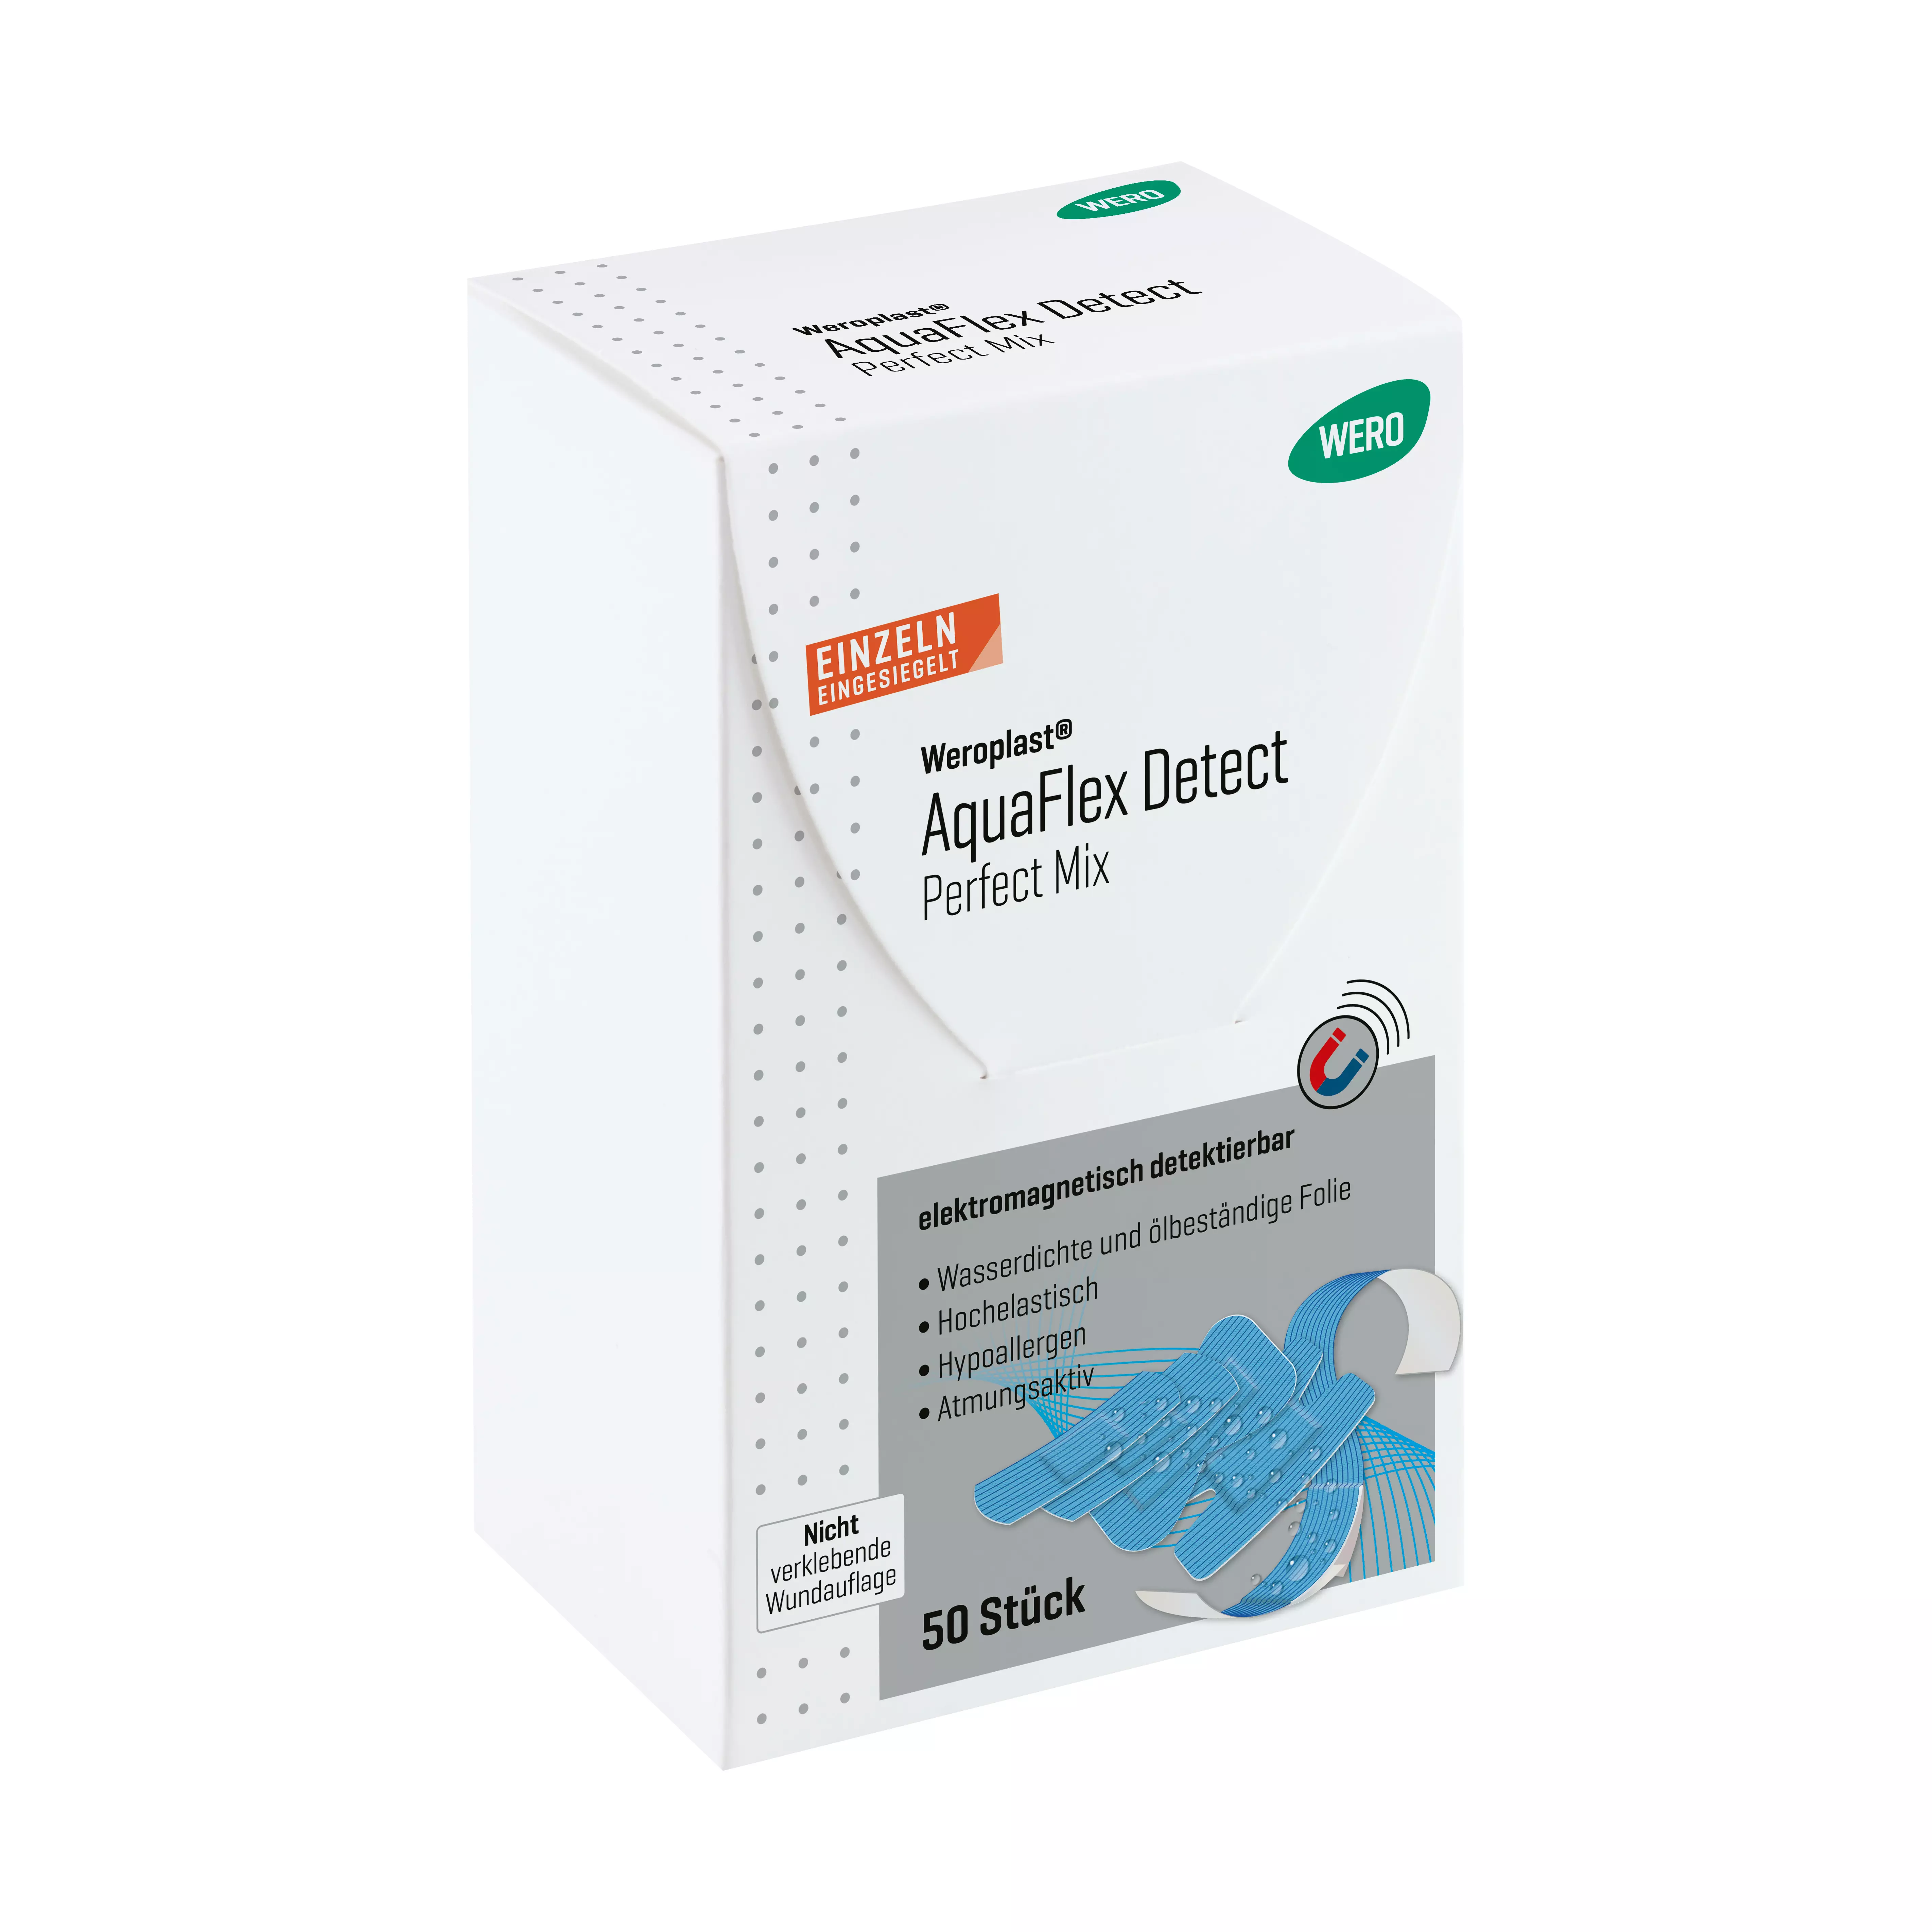 Pflasterset Weroplast® AquaFlex Detect - Perfect Mix